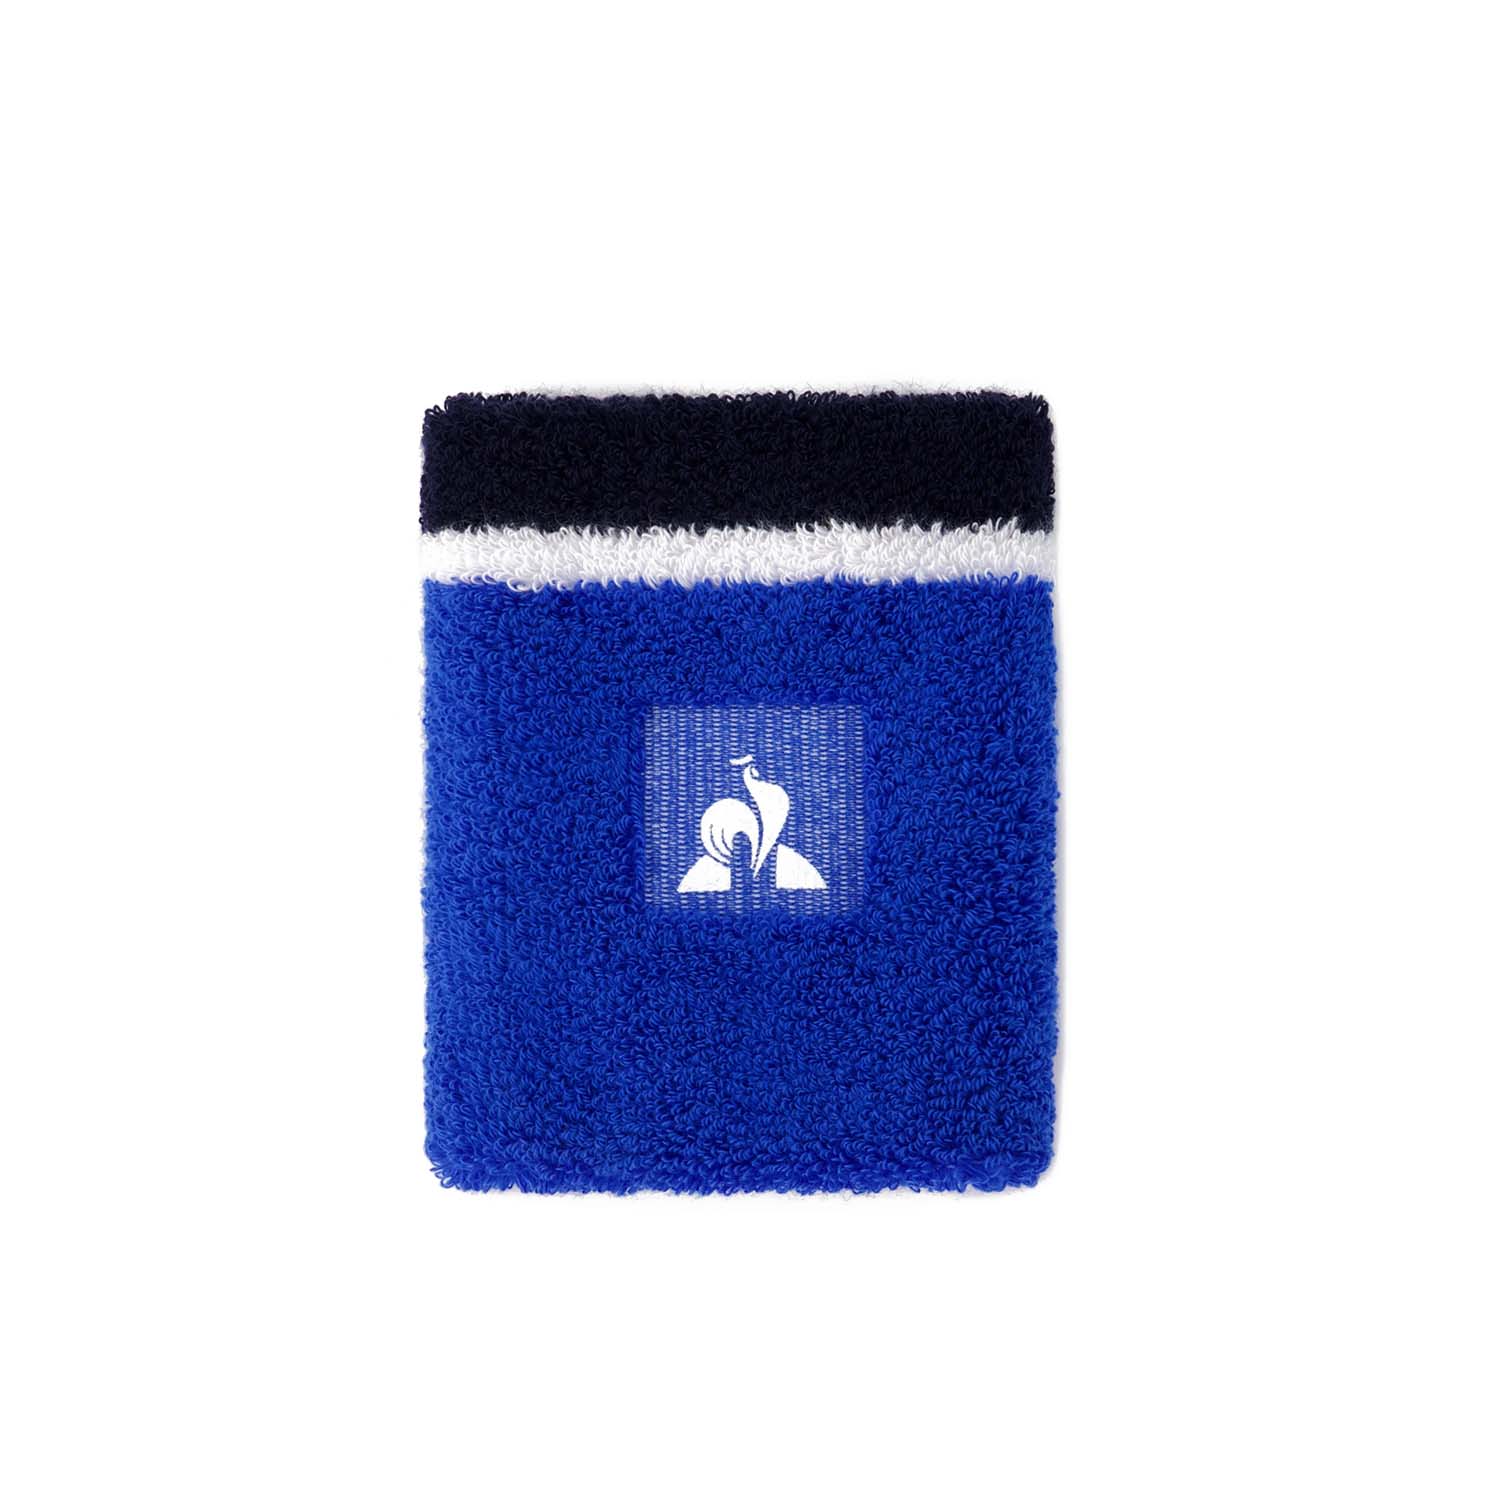 Le Coq Sportif Logo Pro Polsino Lungo - Lapis Blue